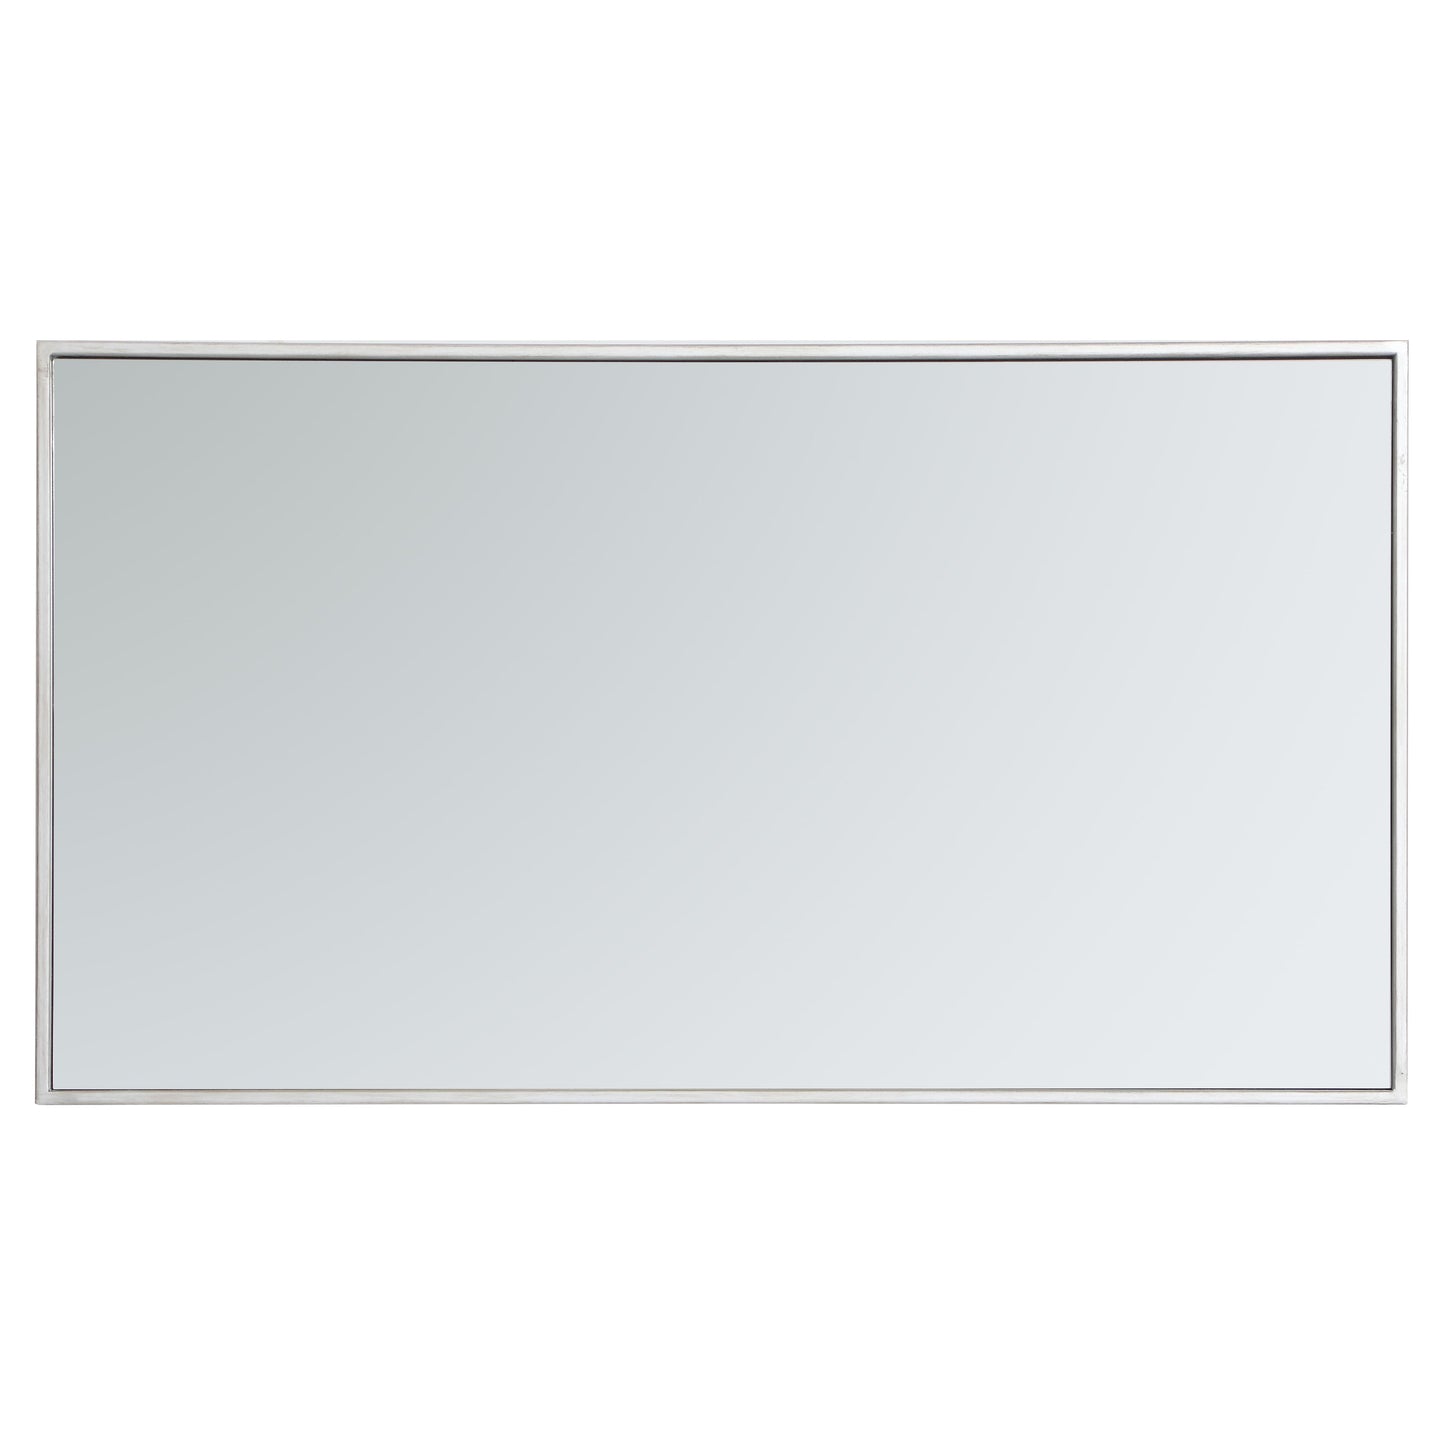 MR42036S Monet 20" x 36" Metal Framed Rectangular Mirror in Silver